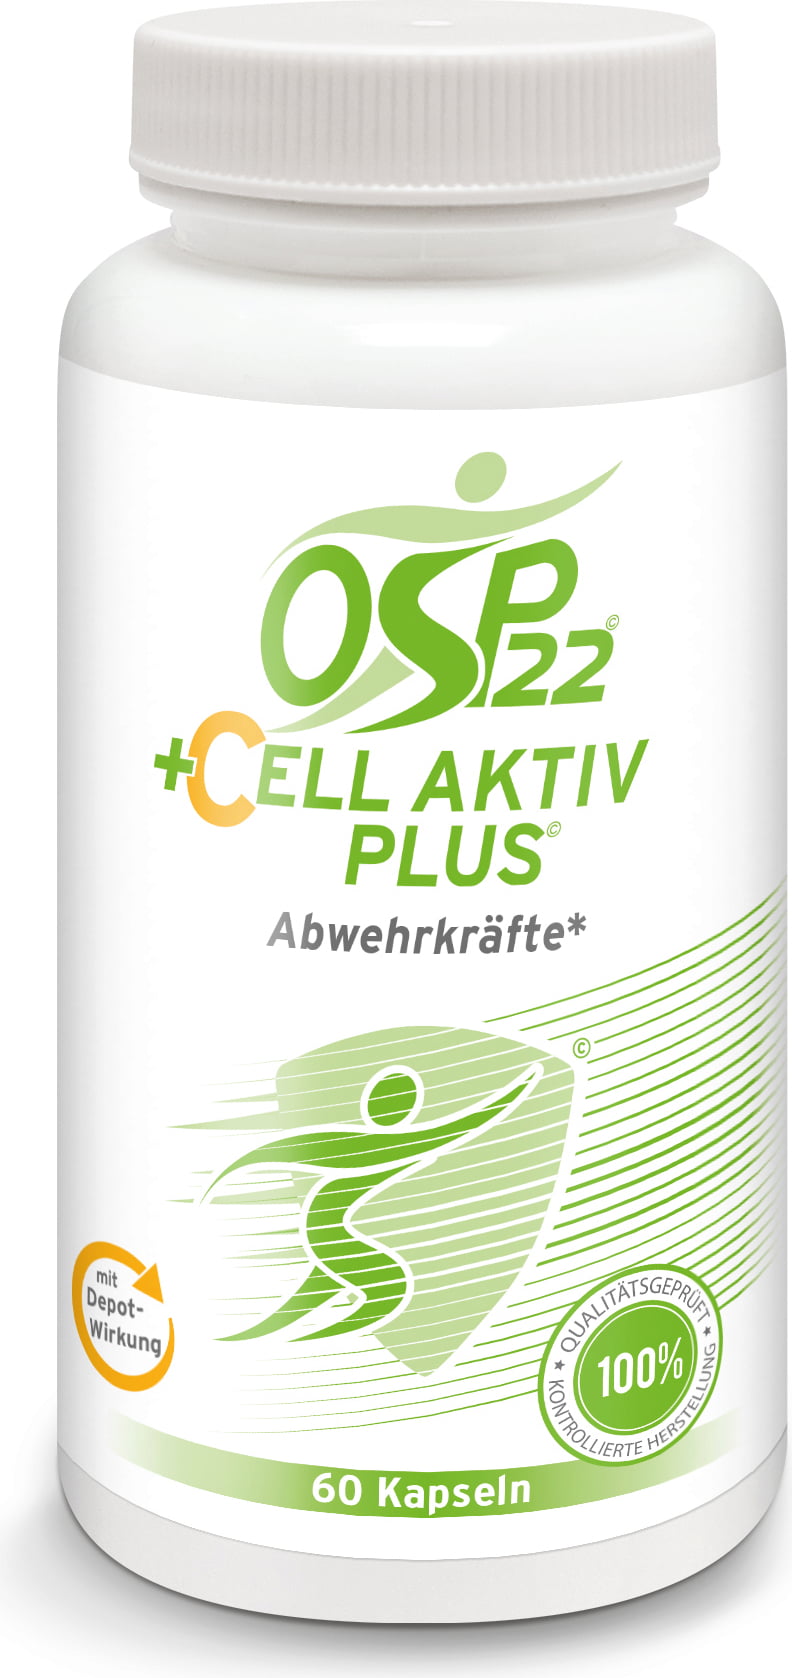 OSP22 Cell Aktiv Plus